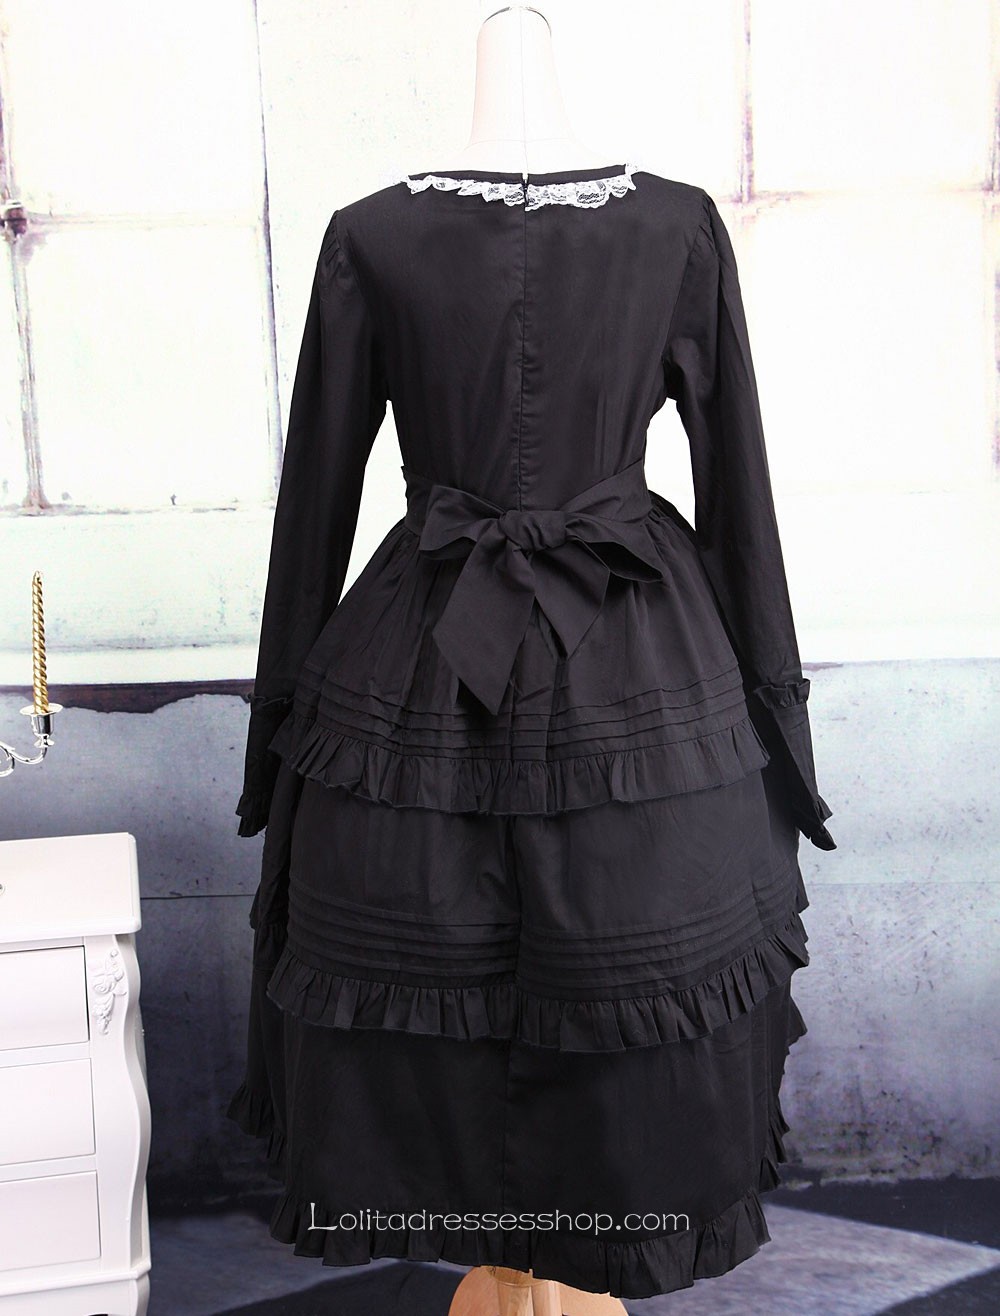 Ruffles Bow Black Long Sleeves Gothic Lolita Dress